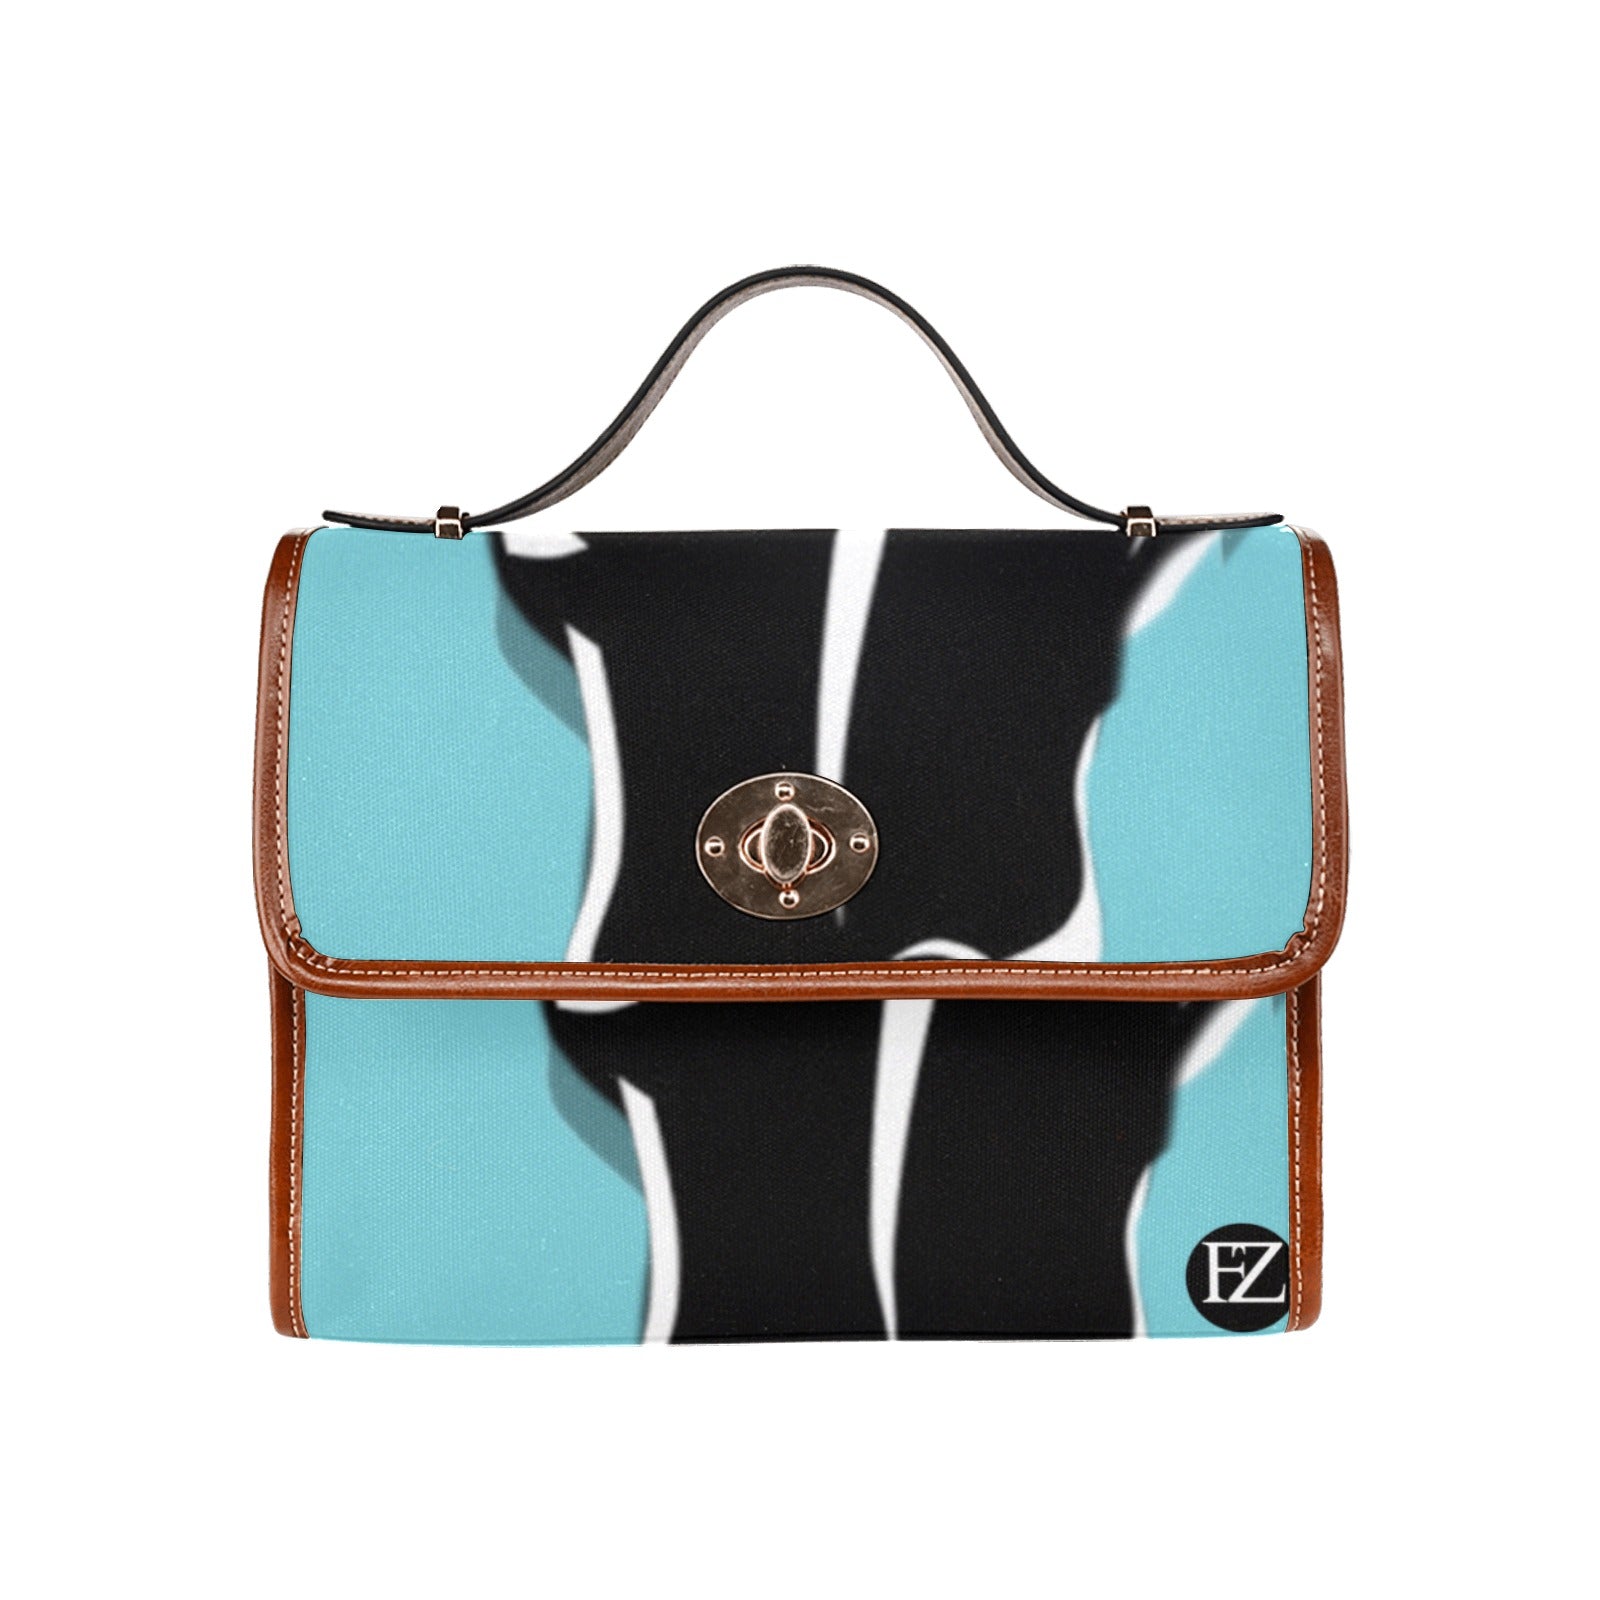 fz bull handbag one size / fz bull handbag - new blue all over print waterproof canvas bag(model1641)(brown strap)